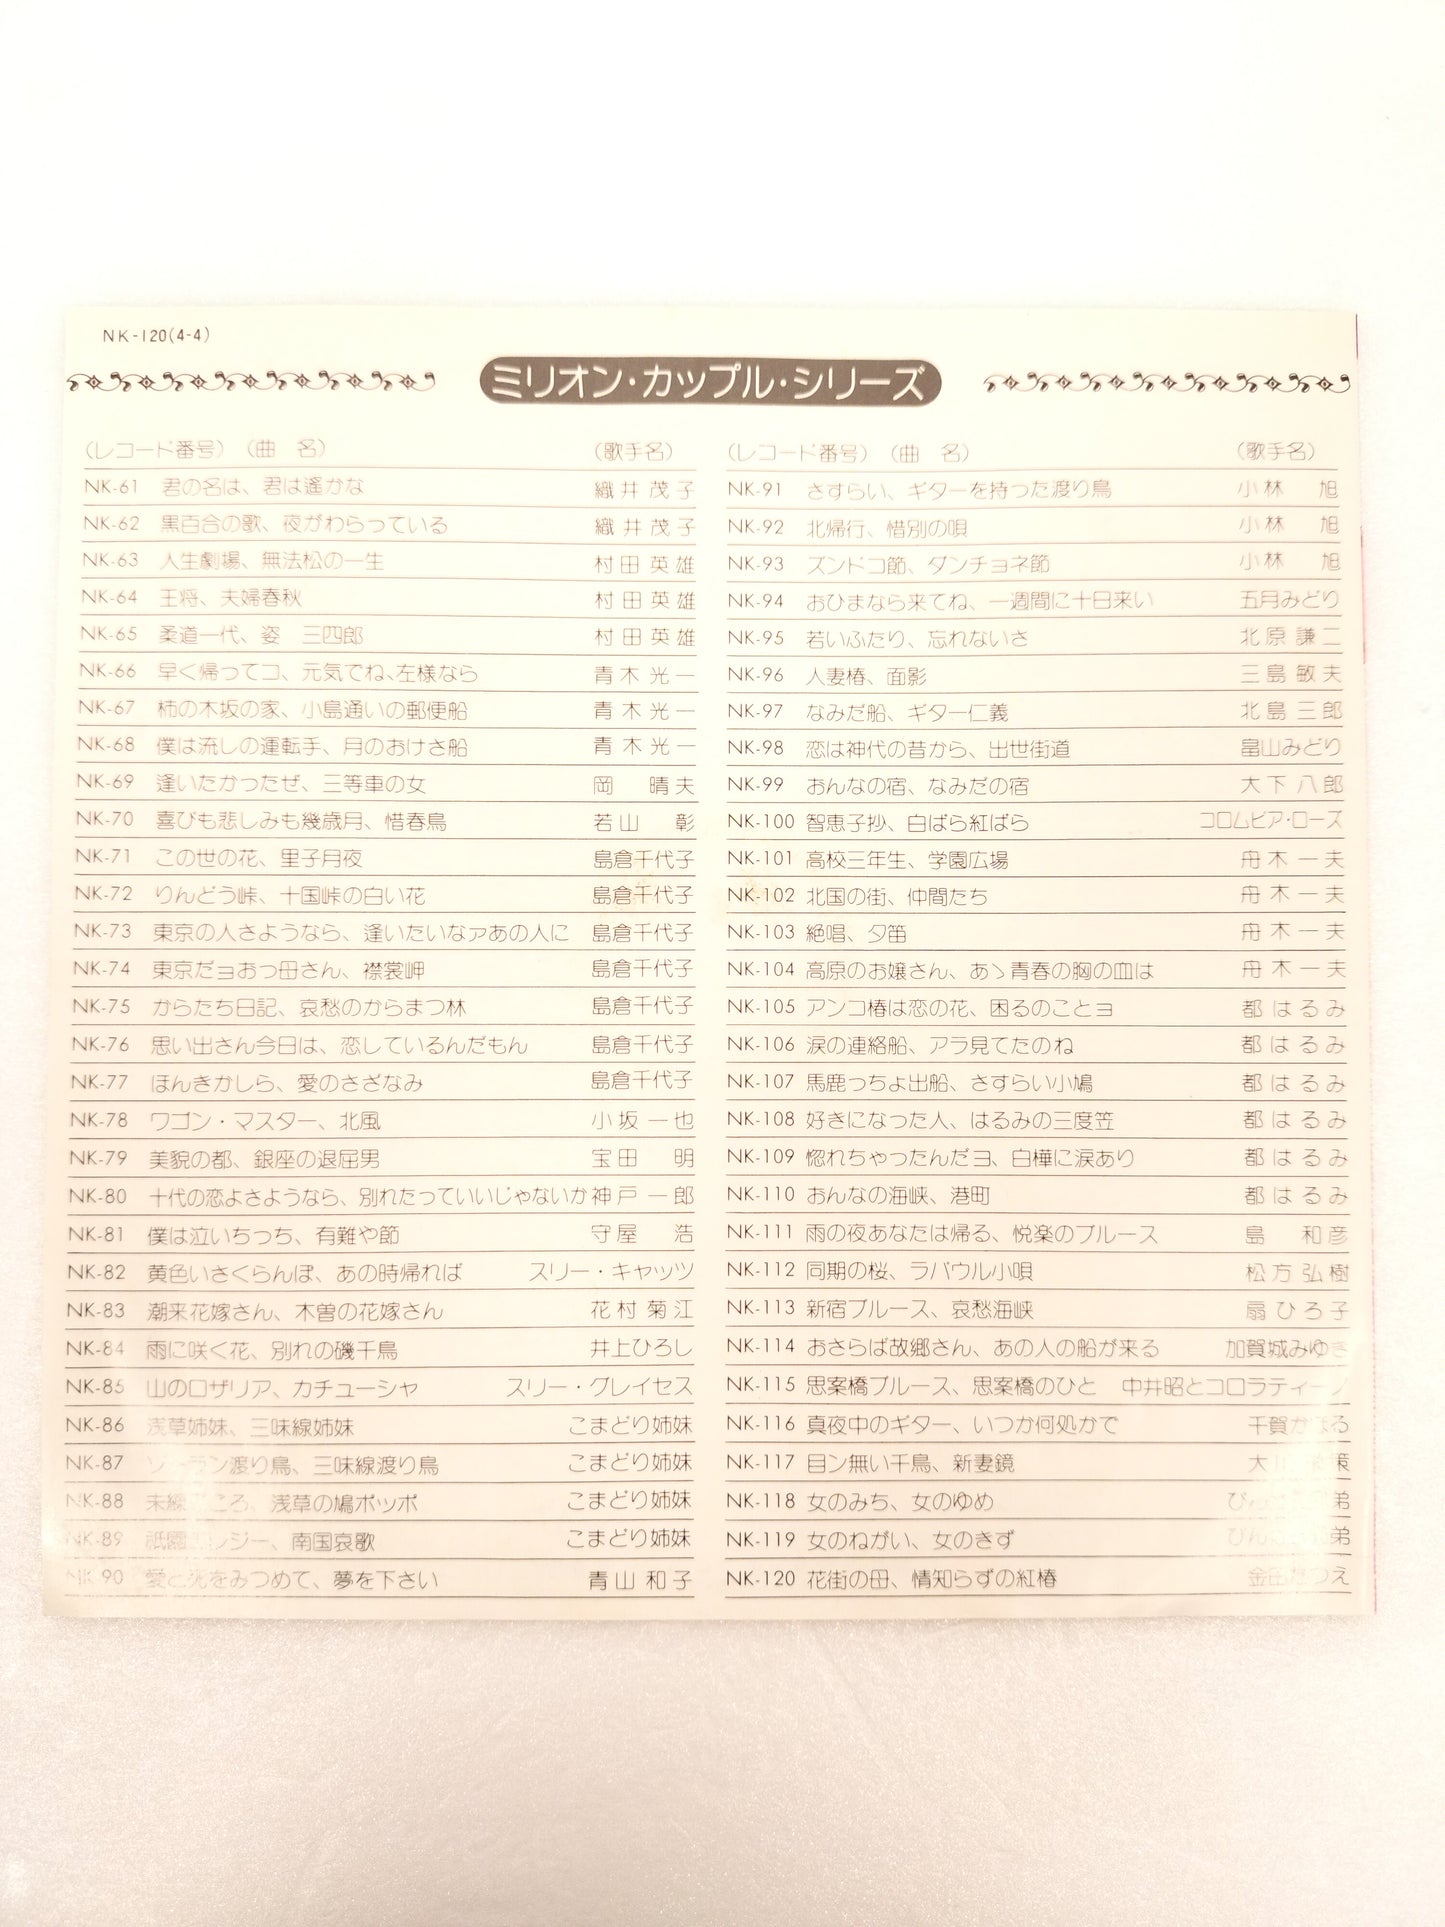 1977 Kagai's Mother Tatsue Kaneda B: Ruthless Red Camellia Japanese record vintage